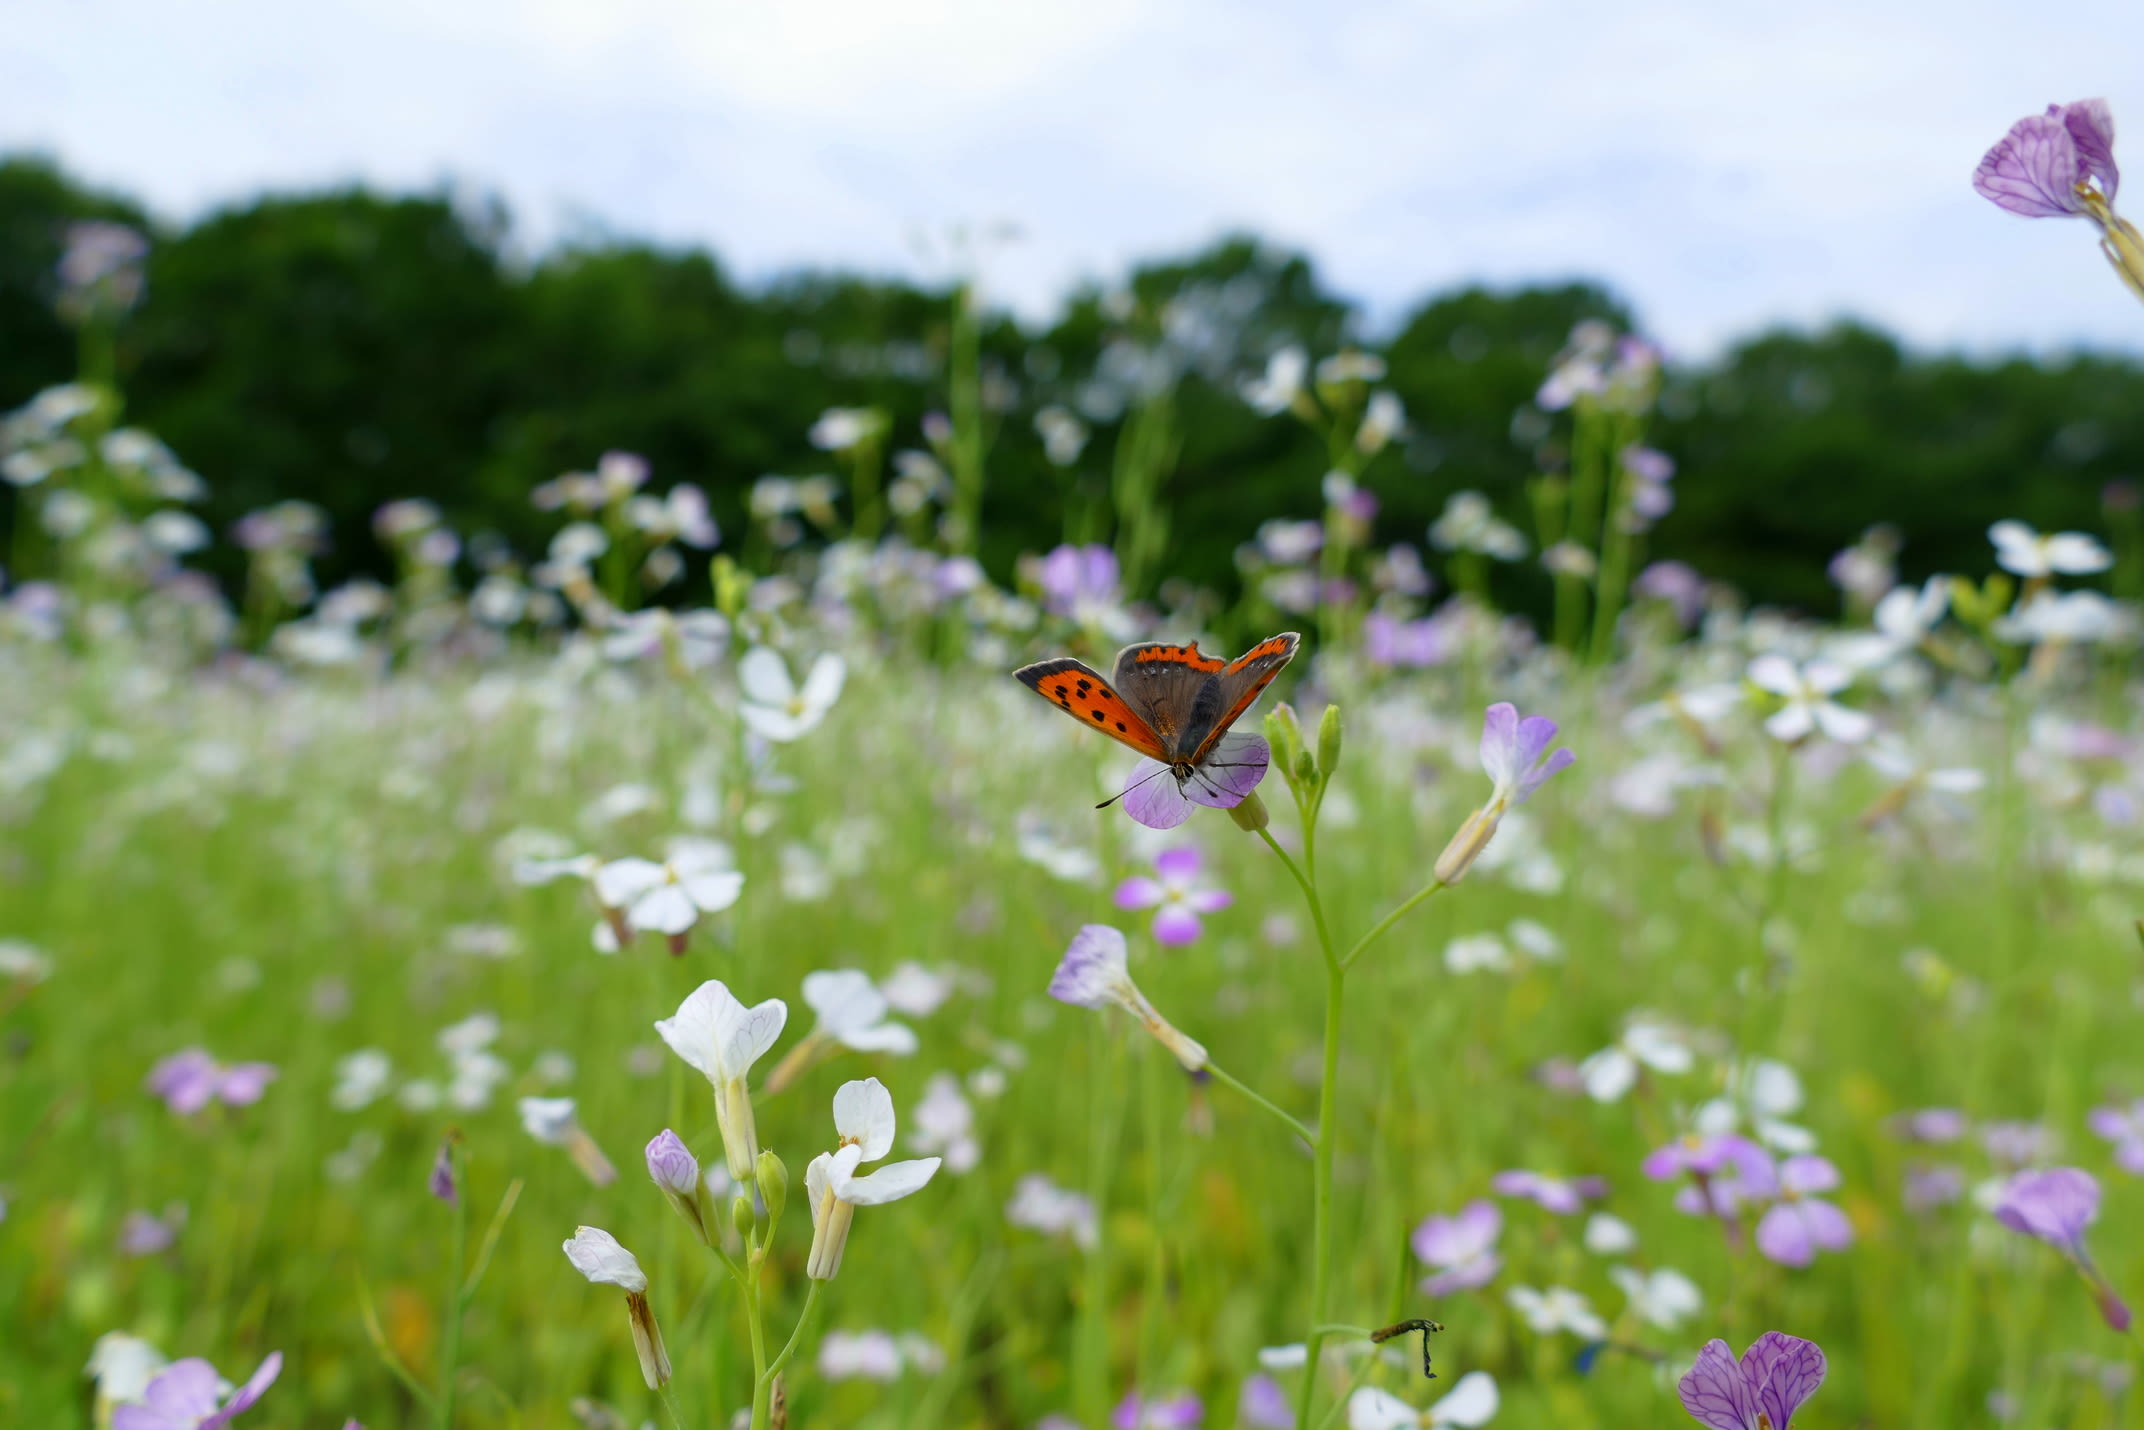 Bewolkte dag met mooie oranje vlinder op paarse en witte bloemetjes